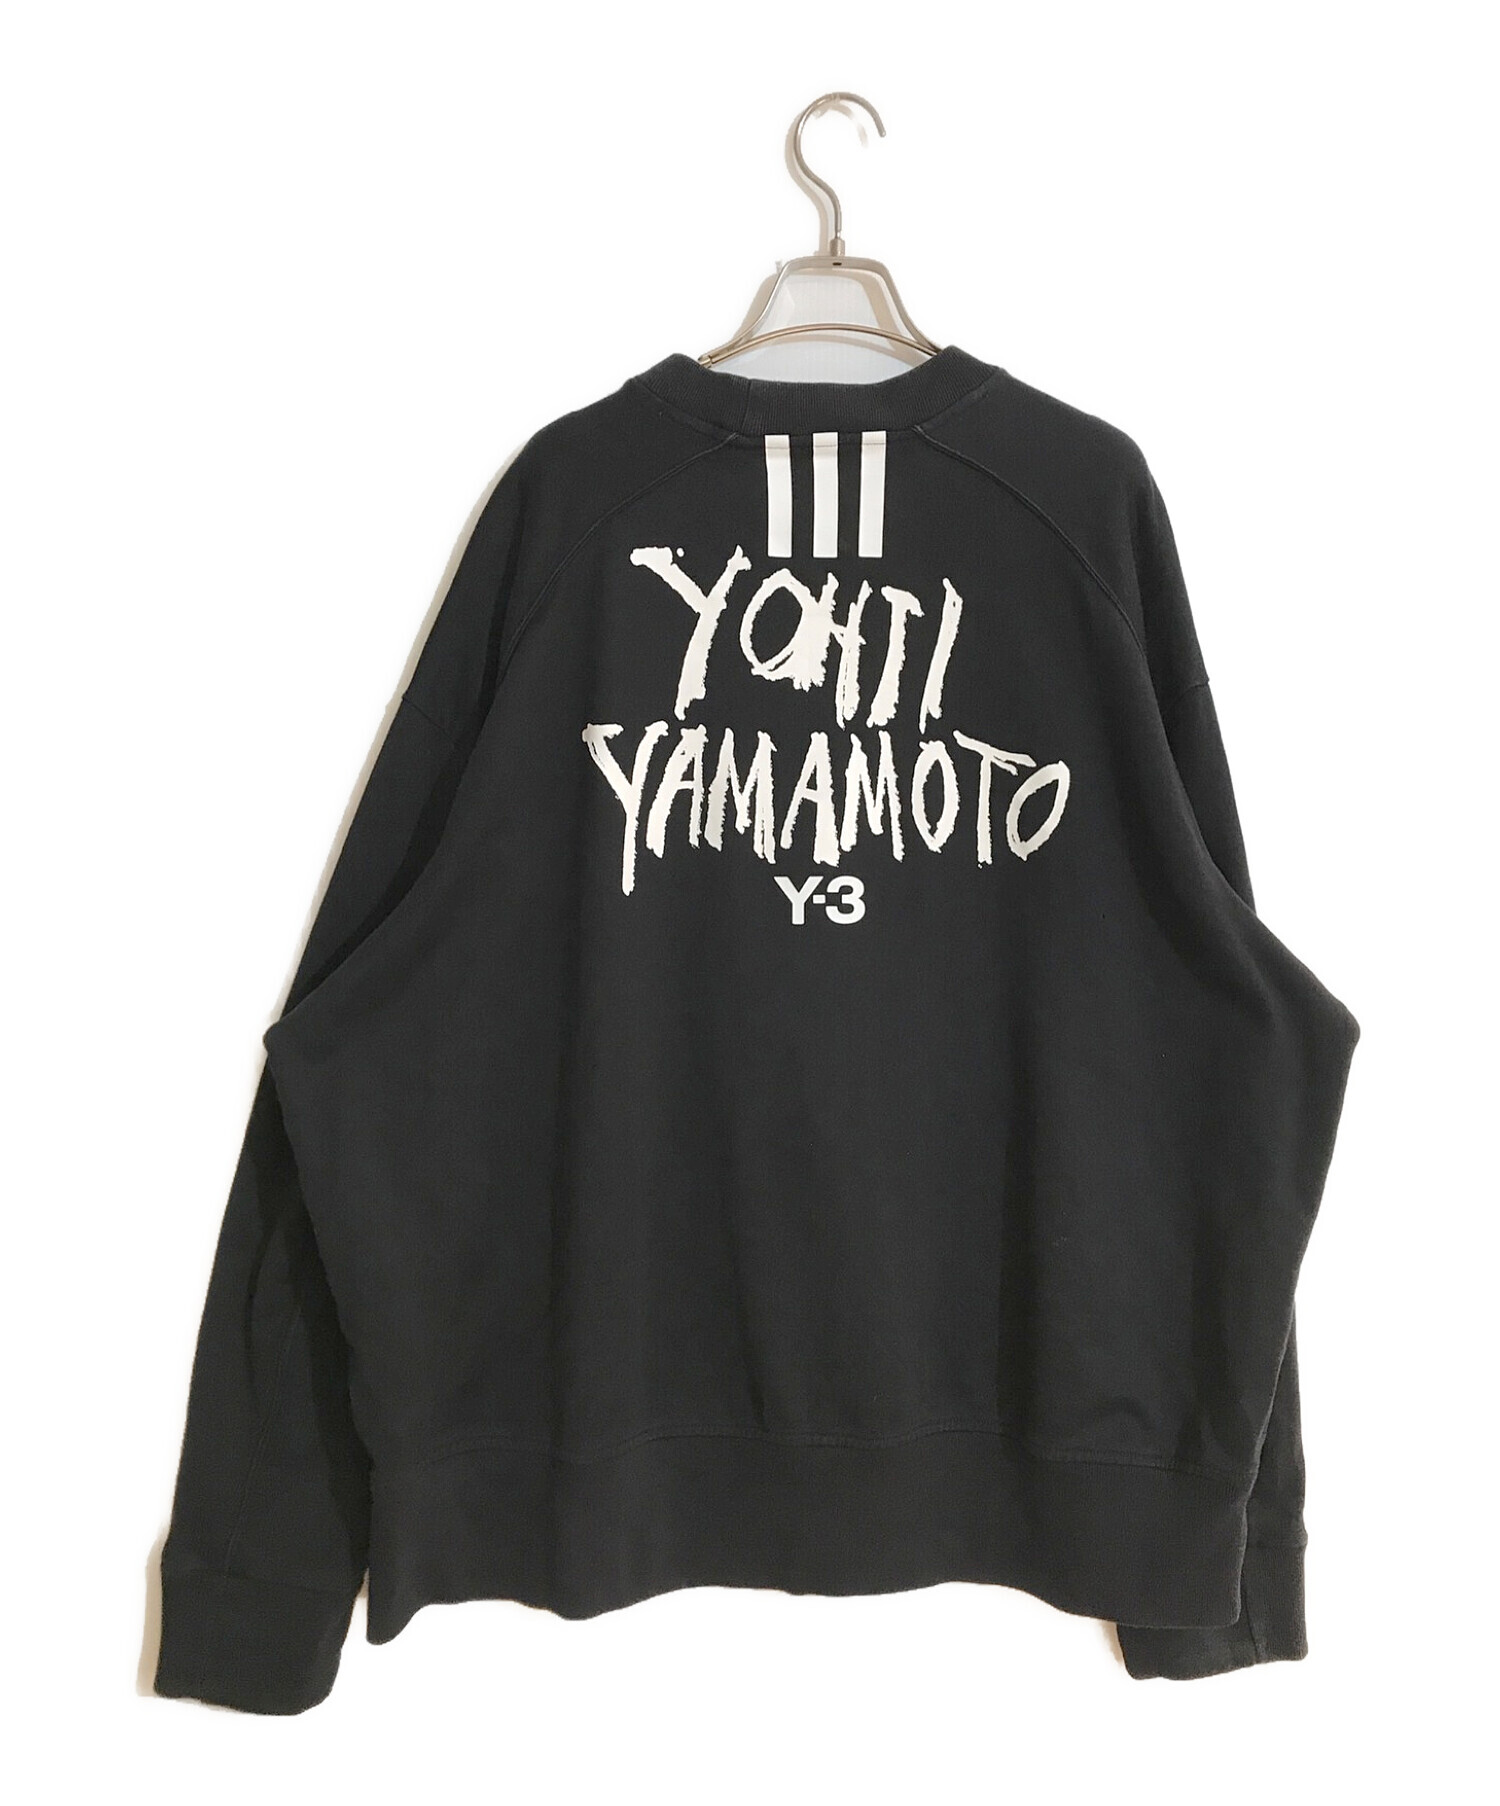 Y-3 (ワイスリー) Signature Graphic Sweatshirt/シグネチャーグラフィックスウェットシャツ ブラック サイズ:L